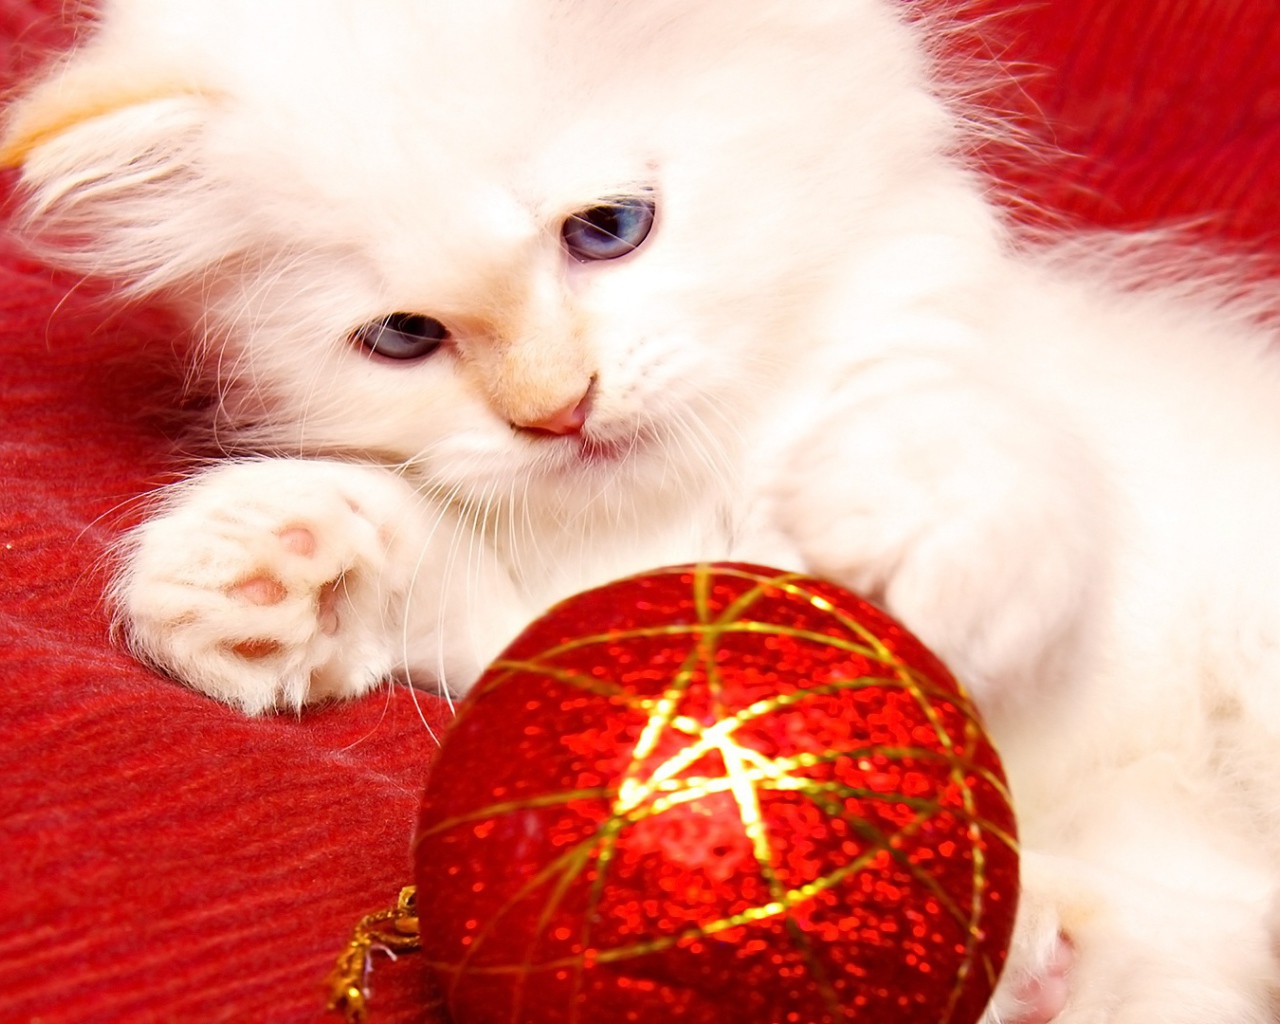 White cat Christmas tree toy